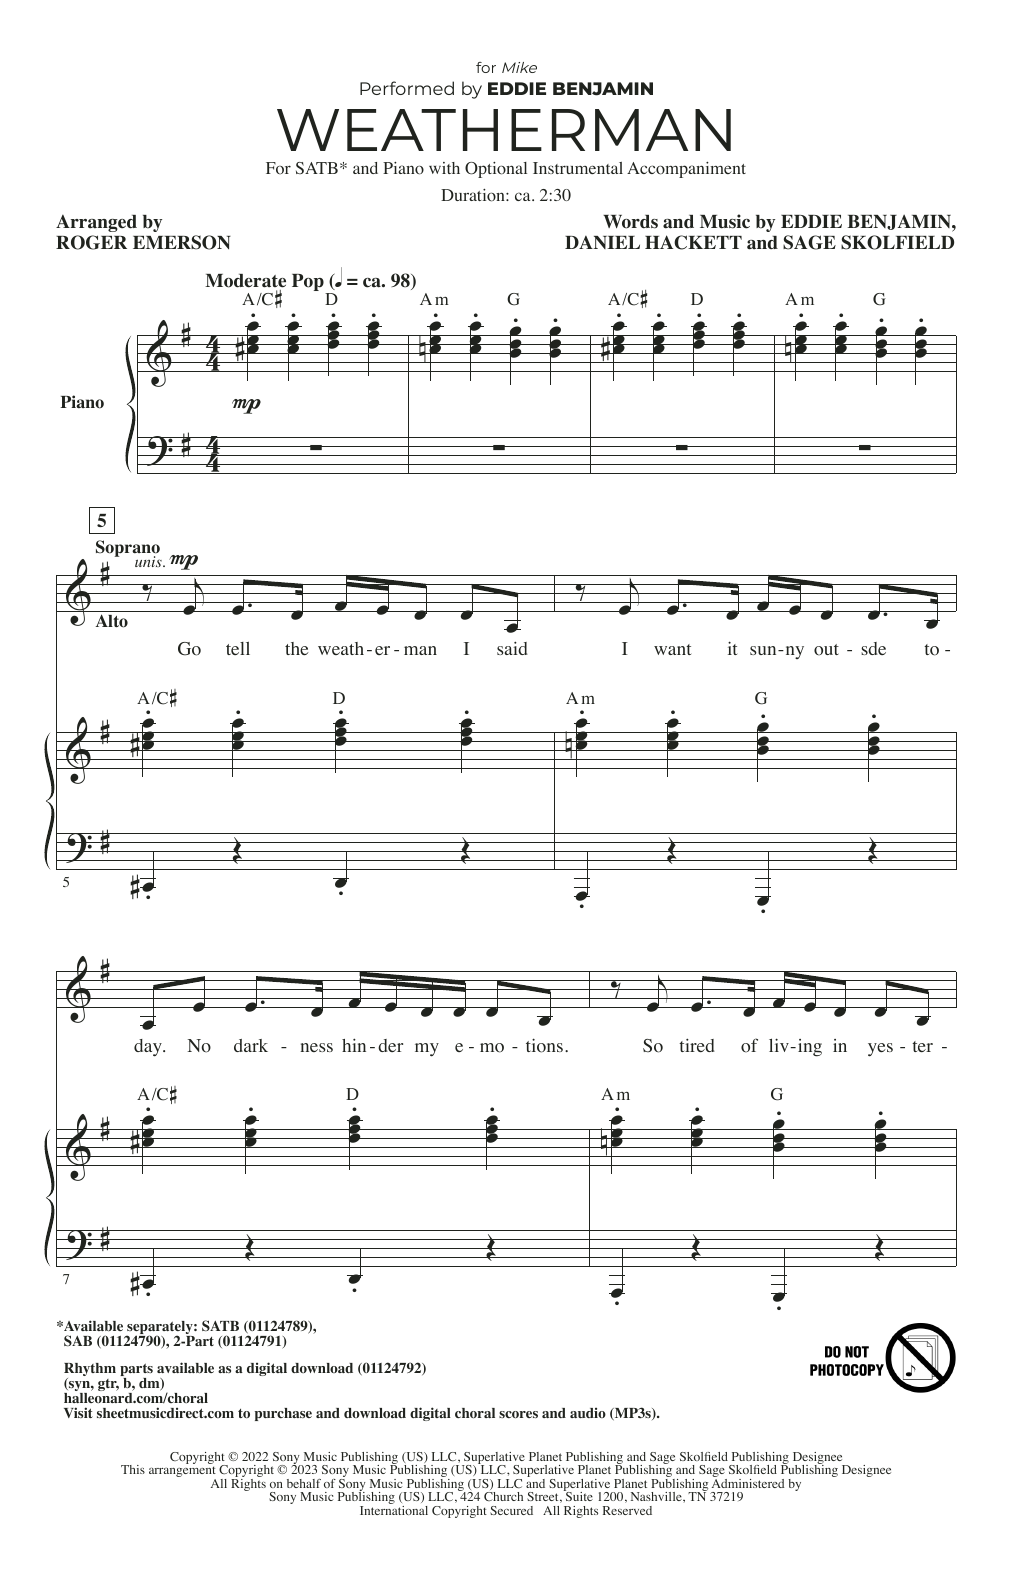 Eddie Benjamin Weatherman (arr. Roger Emerson) Sheet Music Notes & Chords for SATB Choir - Download or Print PDF